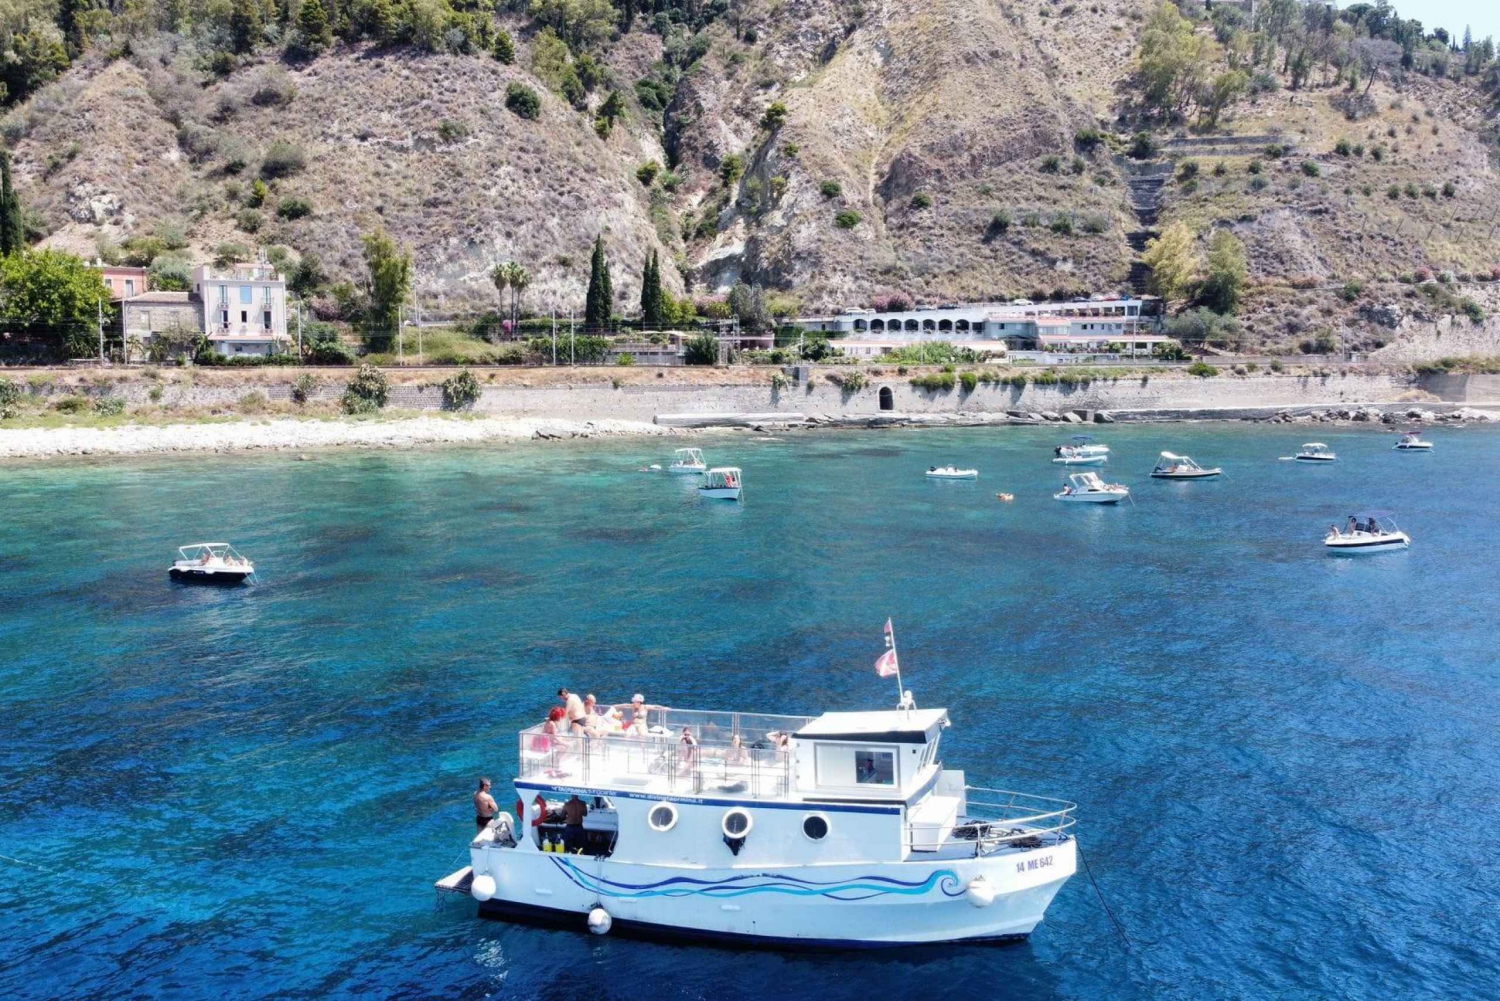 Mini-cruise Isola bella from Giardini Naxos